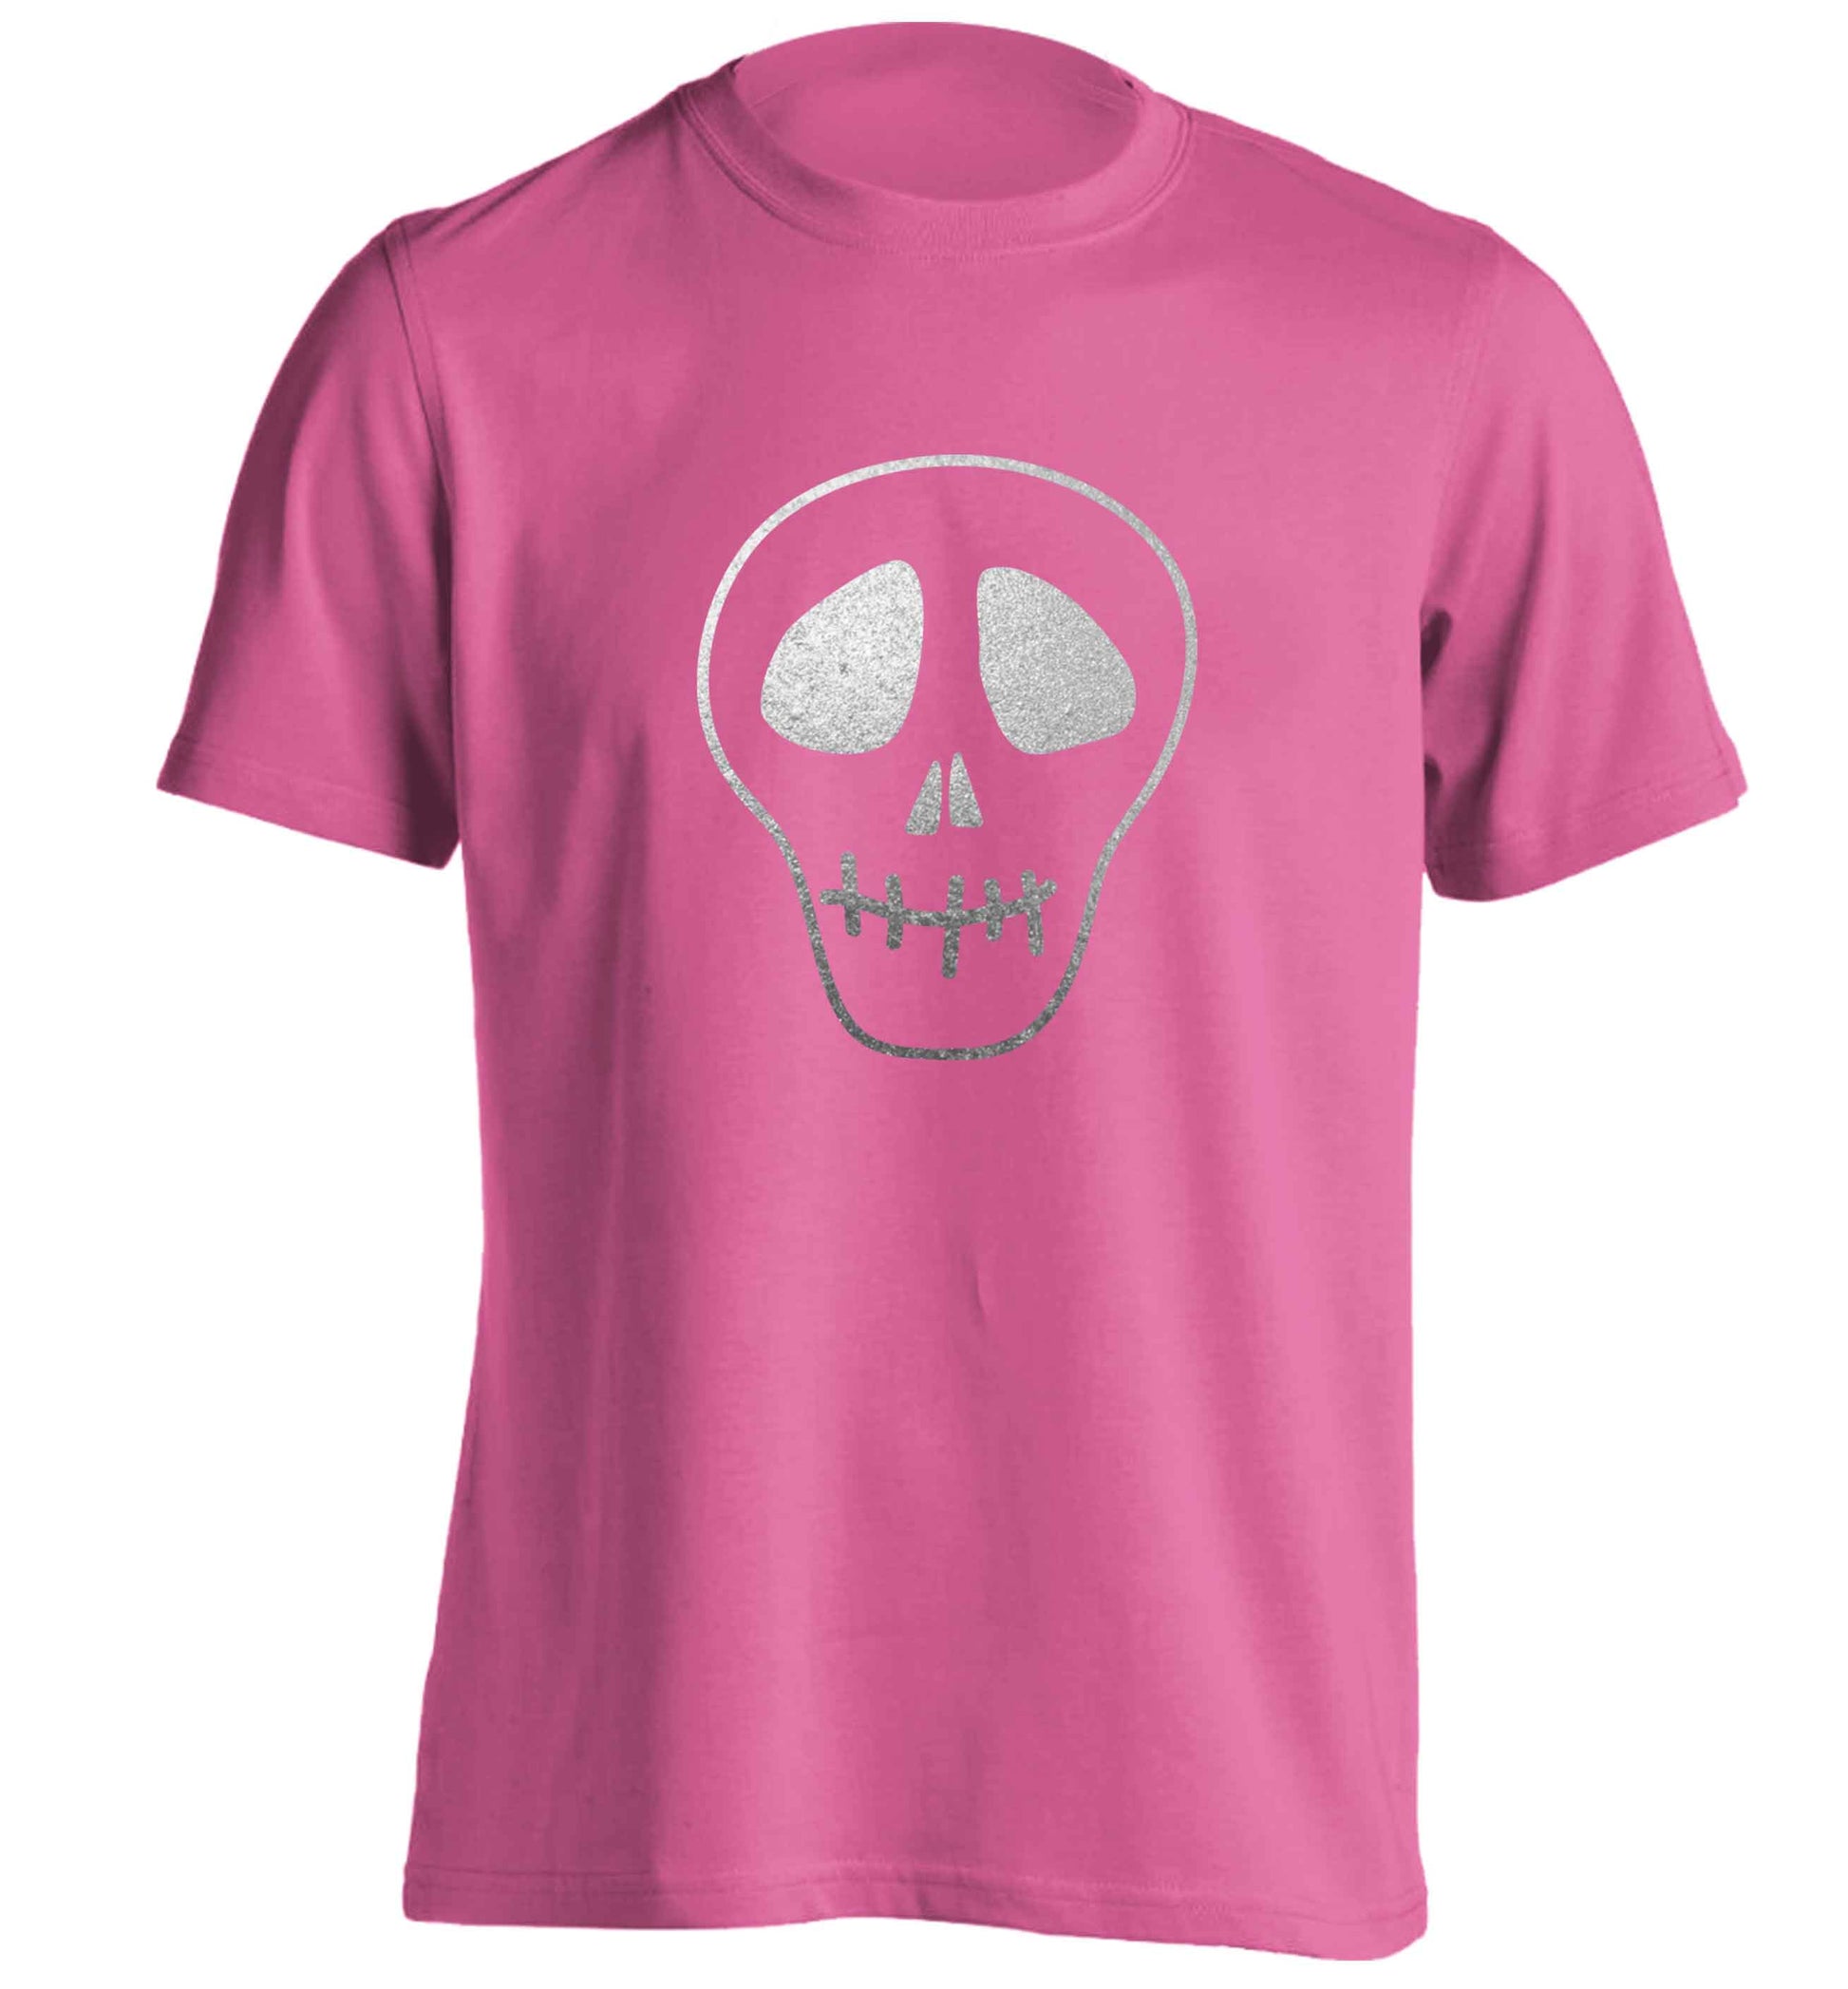 Metallic silver skull adults unisex pink Tshirt 2XL